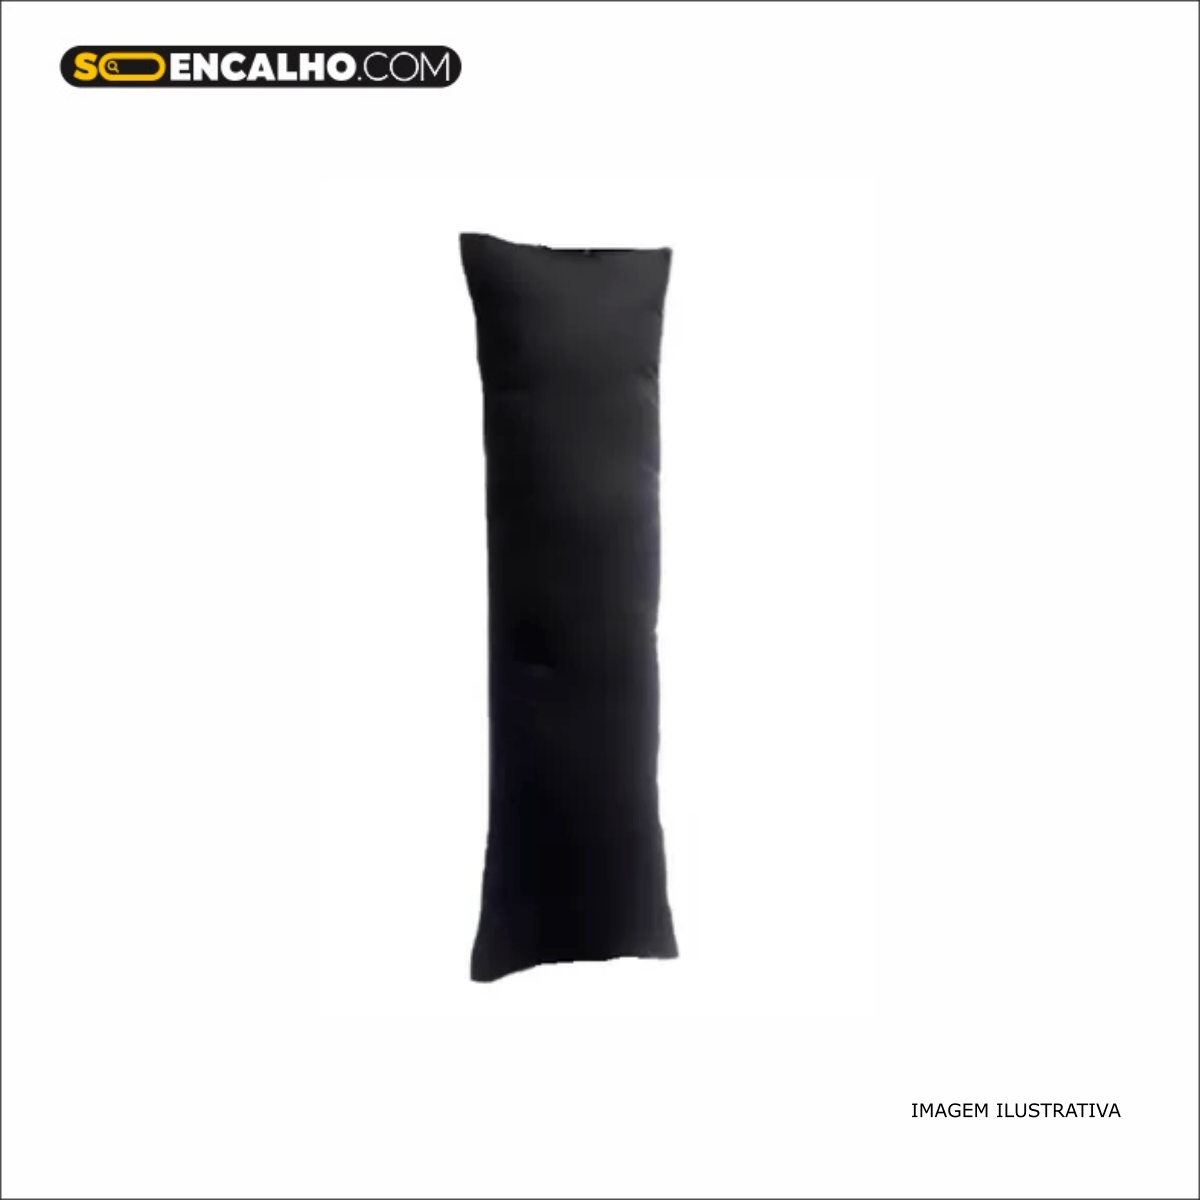 Almofada Protetora Cinto de Seguranca  (preto) Universal - Ref. 003564-3 Chg